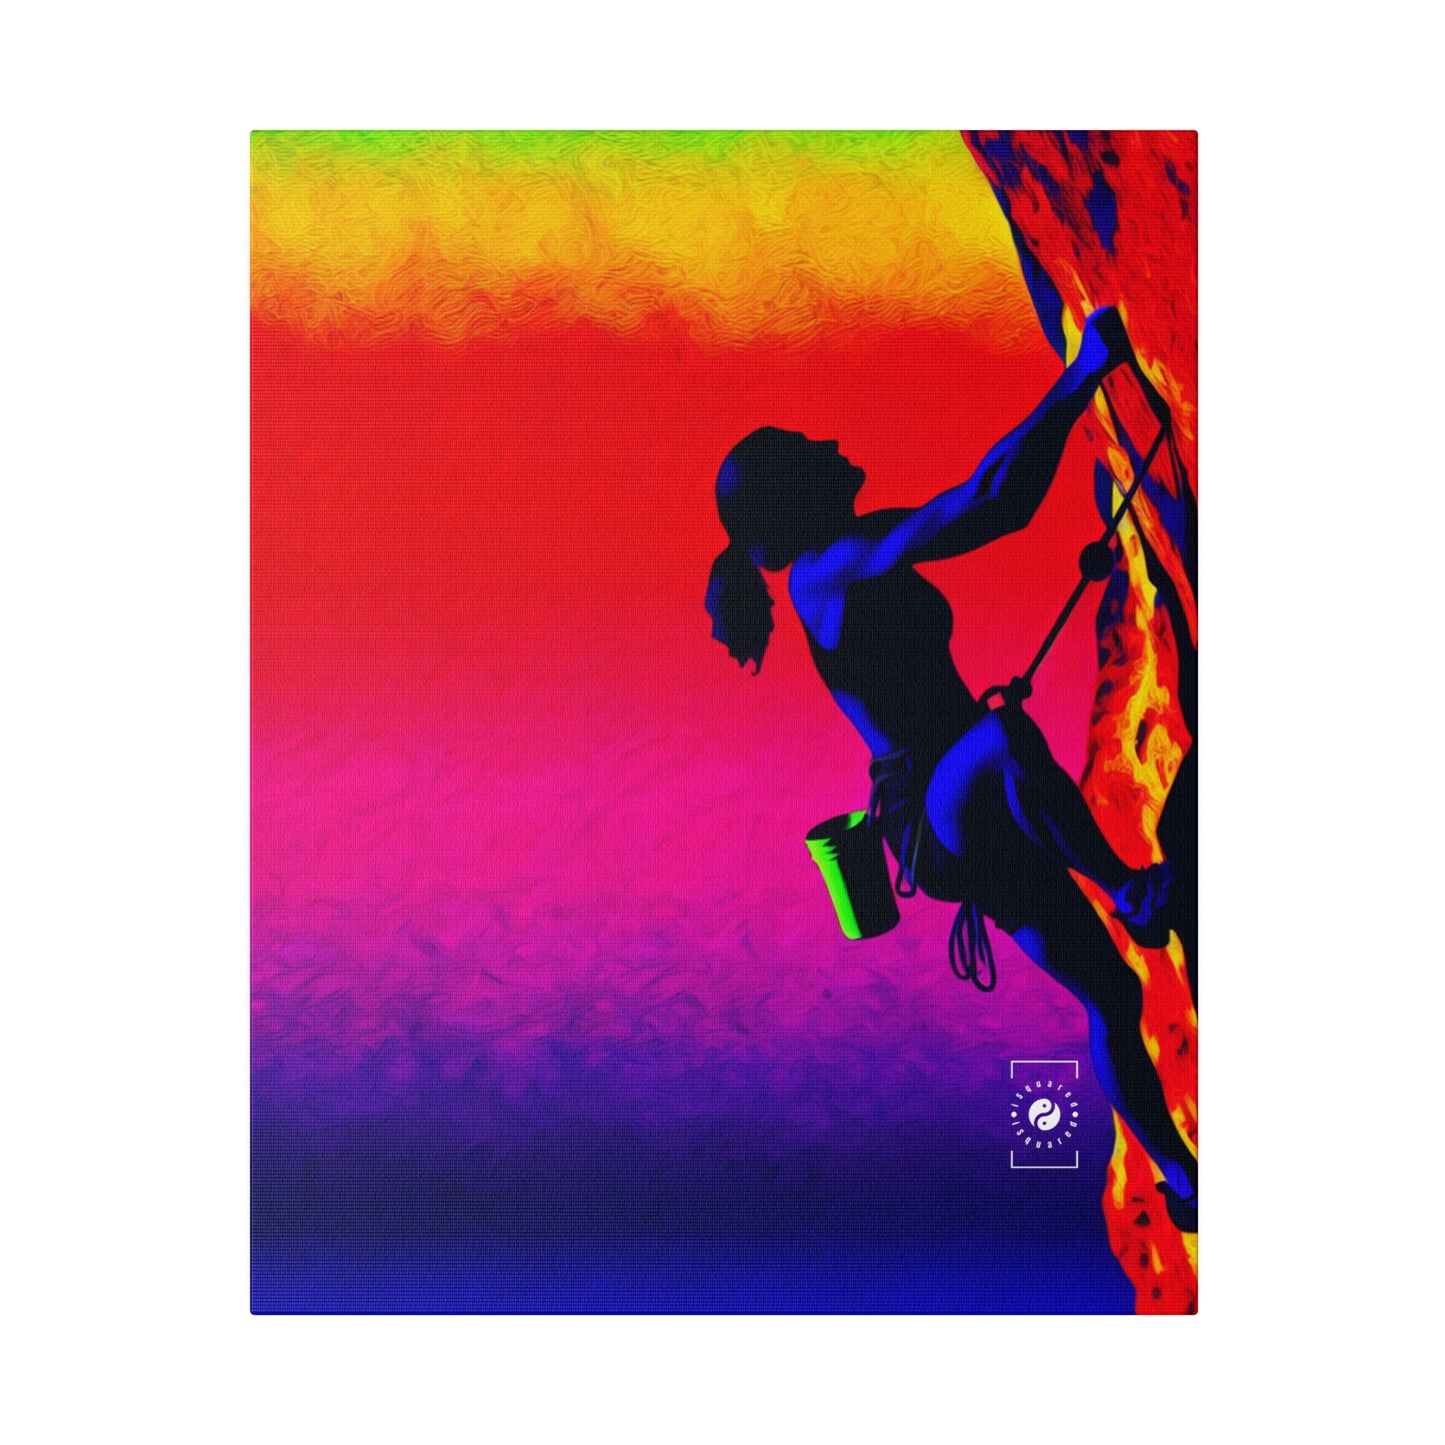 "Technicolour Ascent: The Digital Highline" - Art Print Canvas